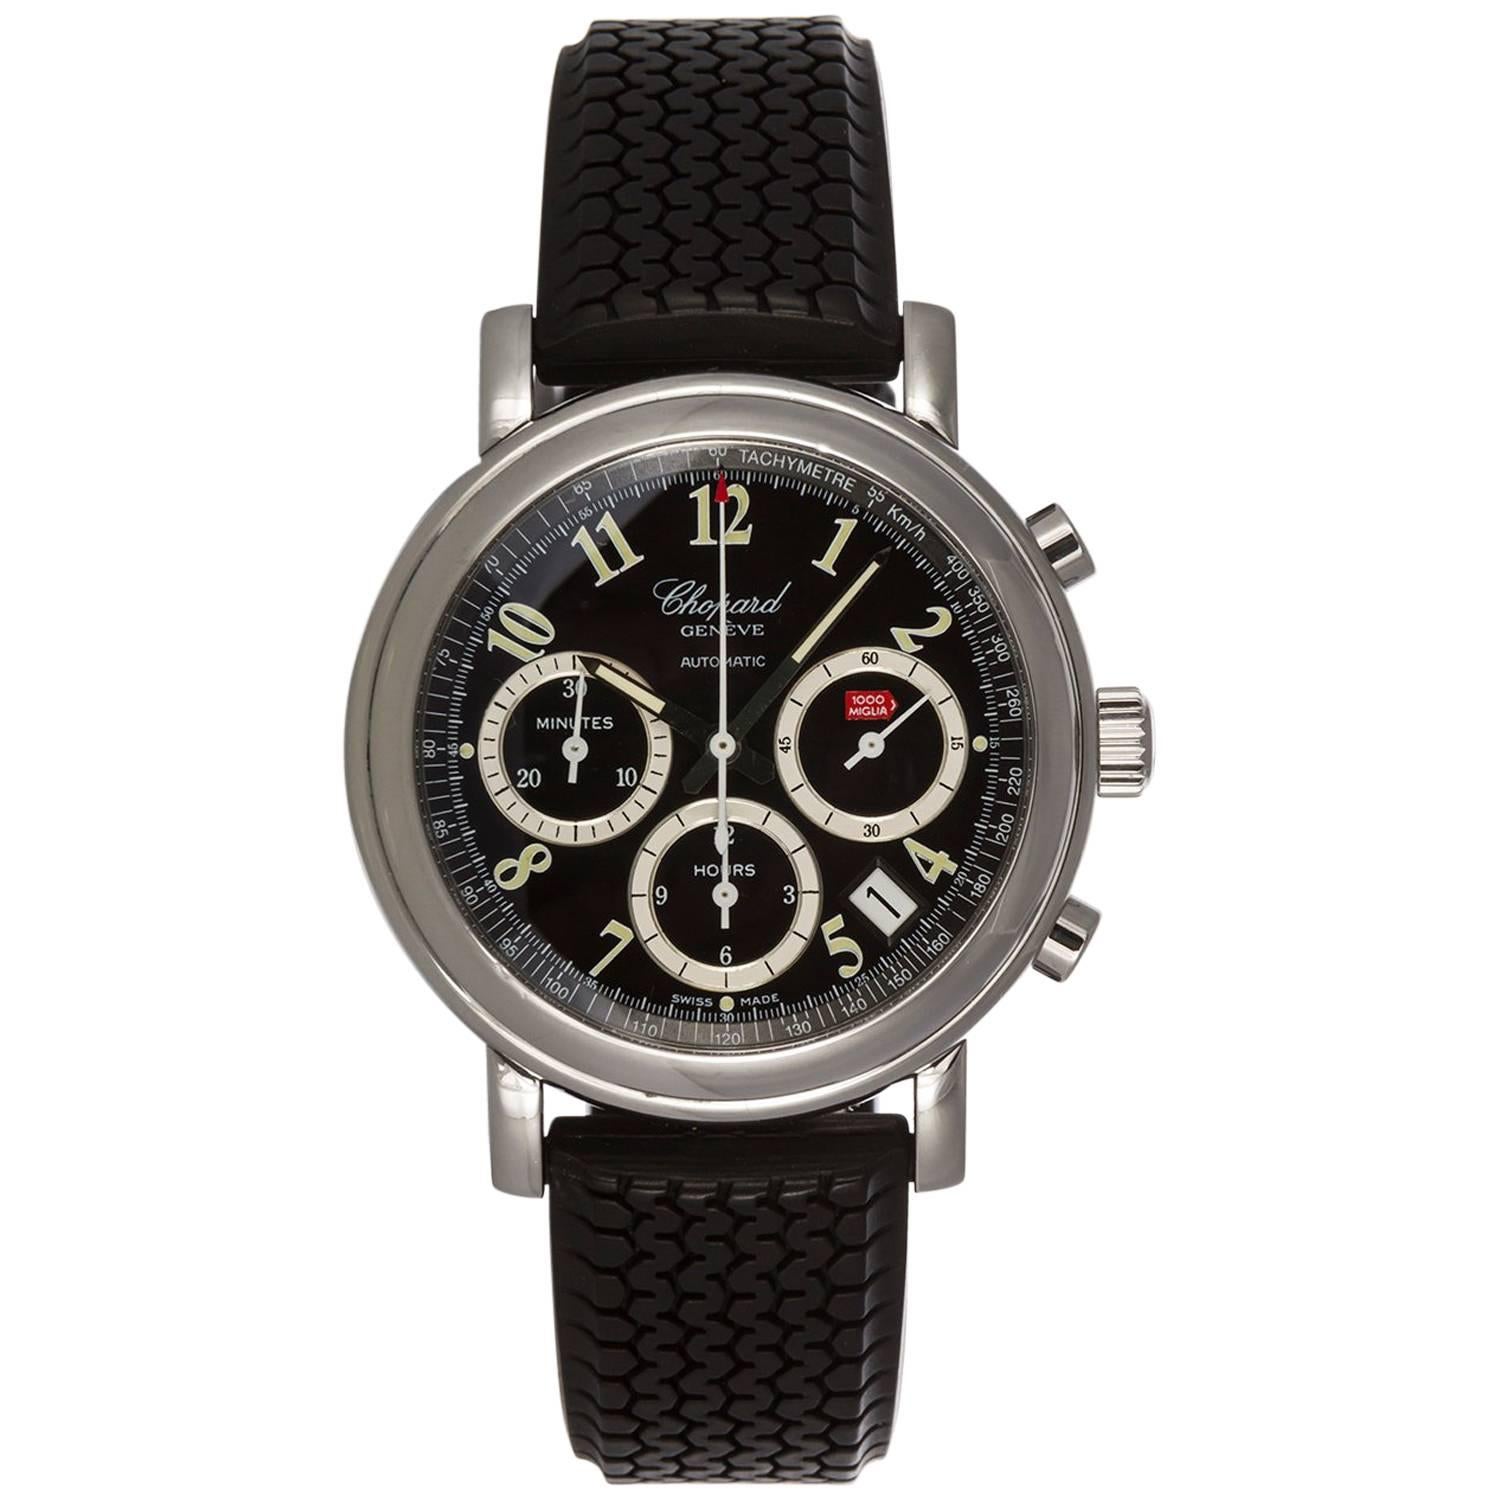 Chopard Stainless Steel 1000 Miglia Chronograph Automatic Wristwatch ref 8331 